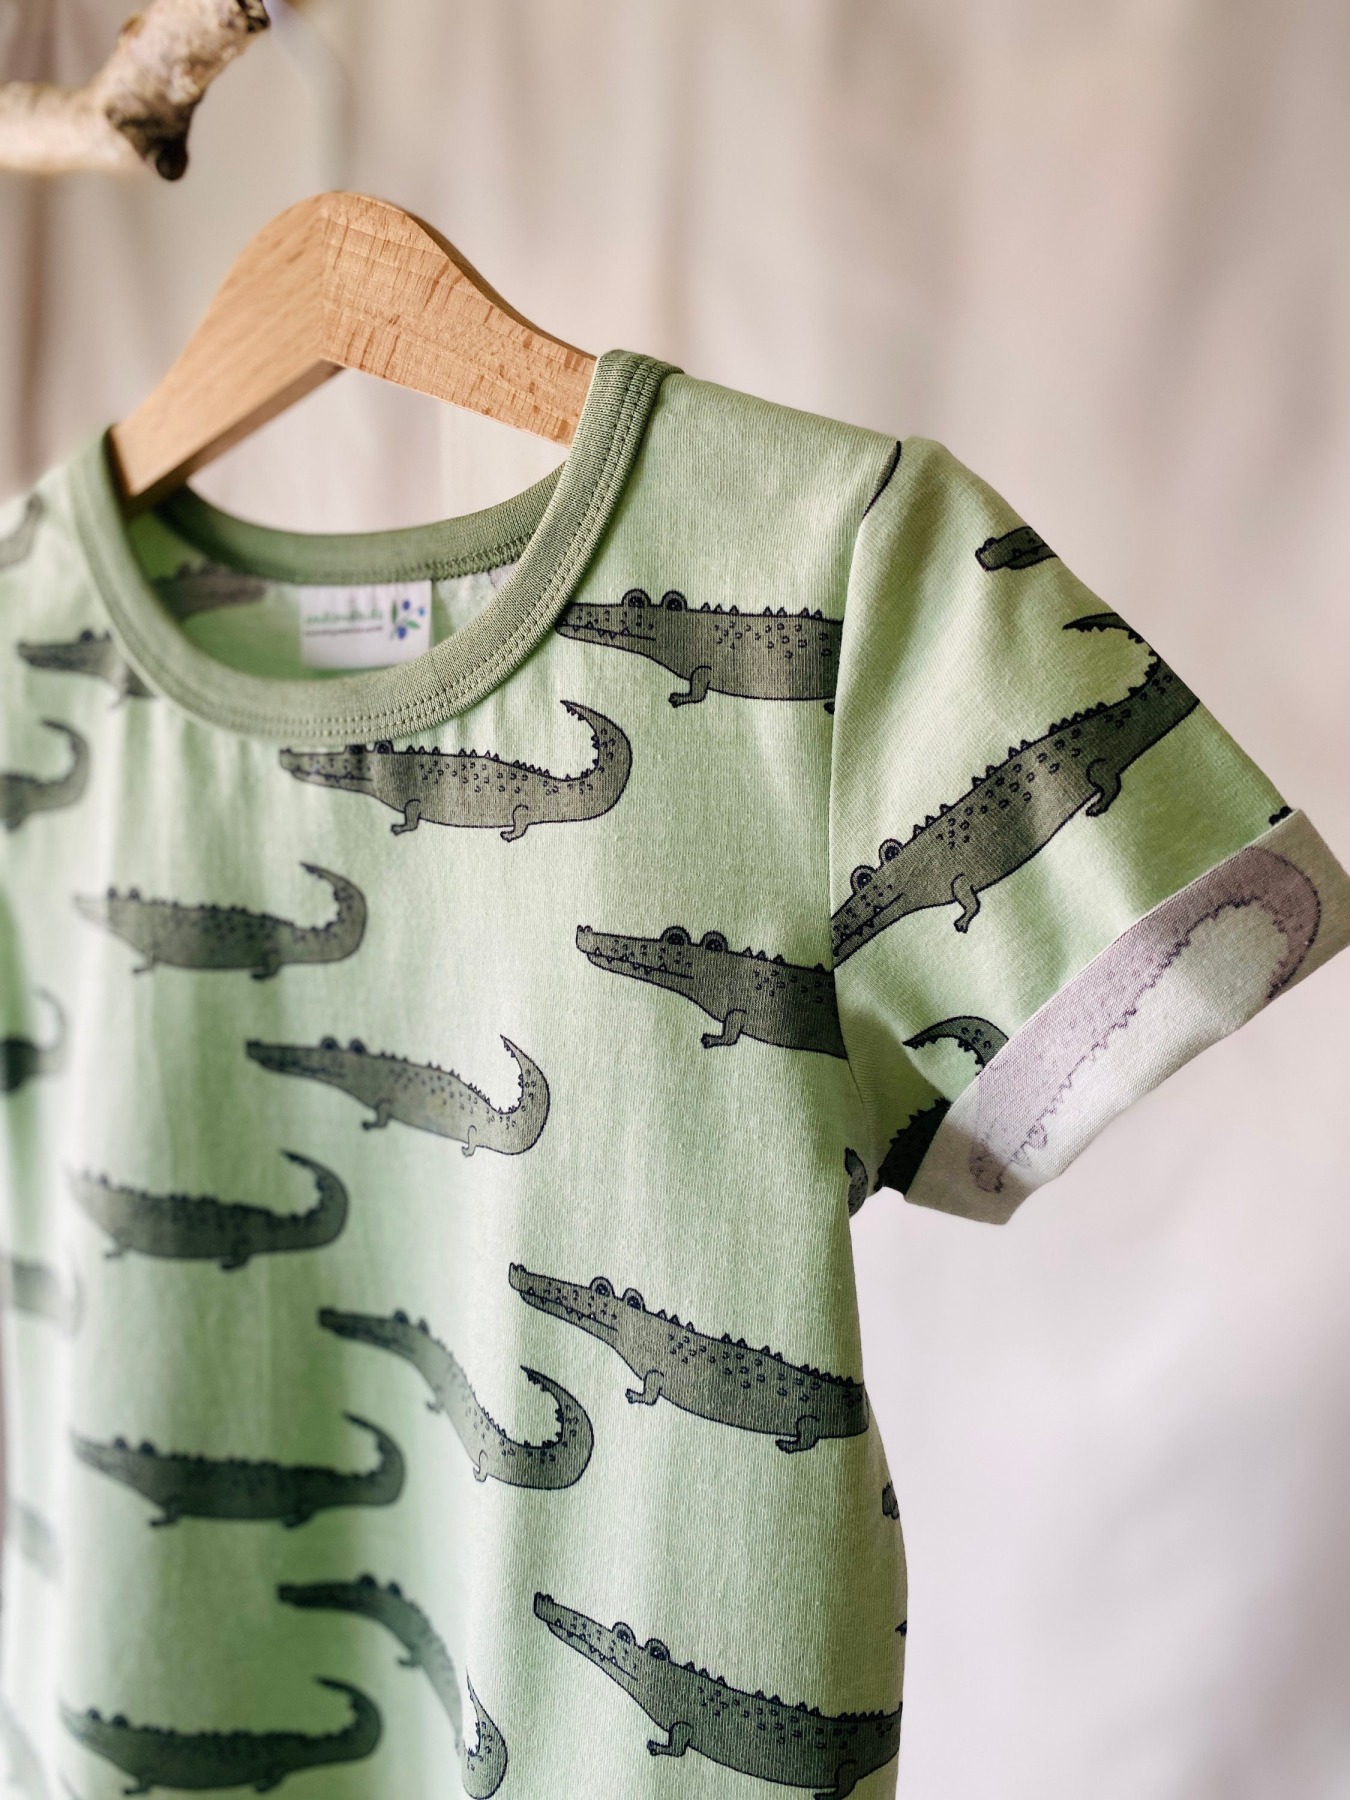 Kinder T-Shirt Åsa, Stoff wählbar, sommerliches T-Shirt mit Aufschlag am Ärmel, smalandslängtan